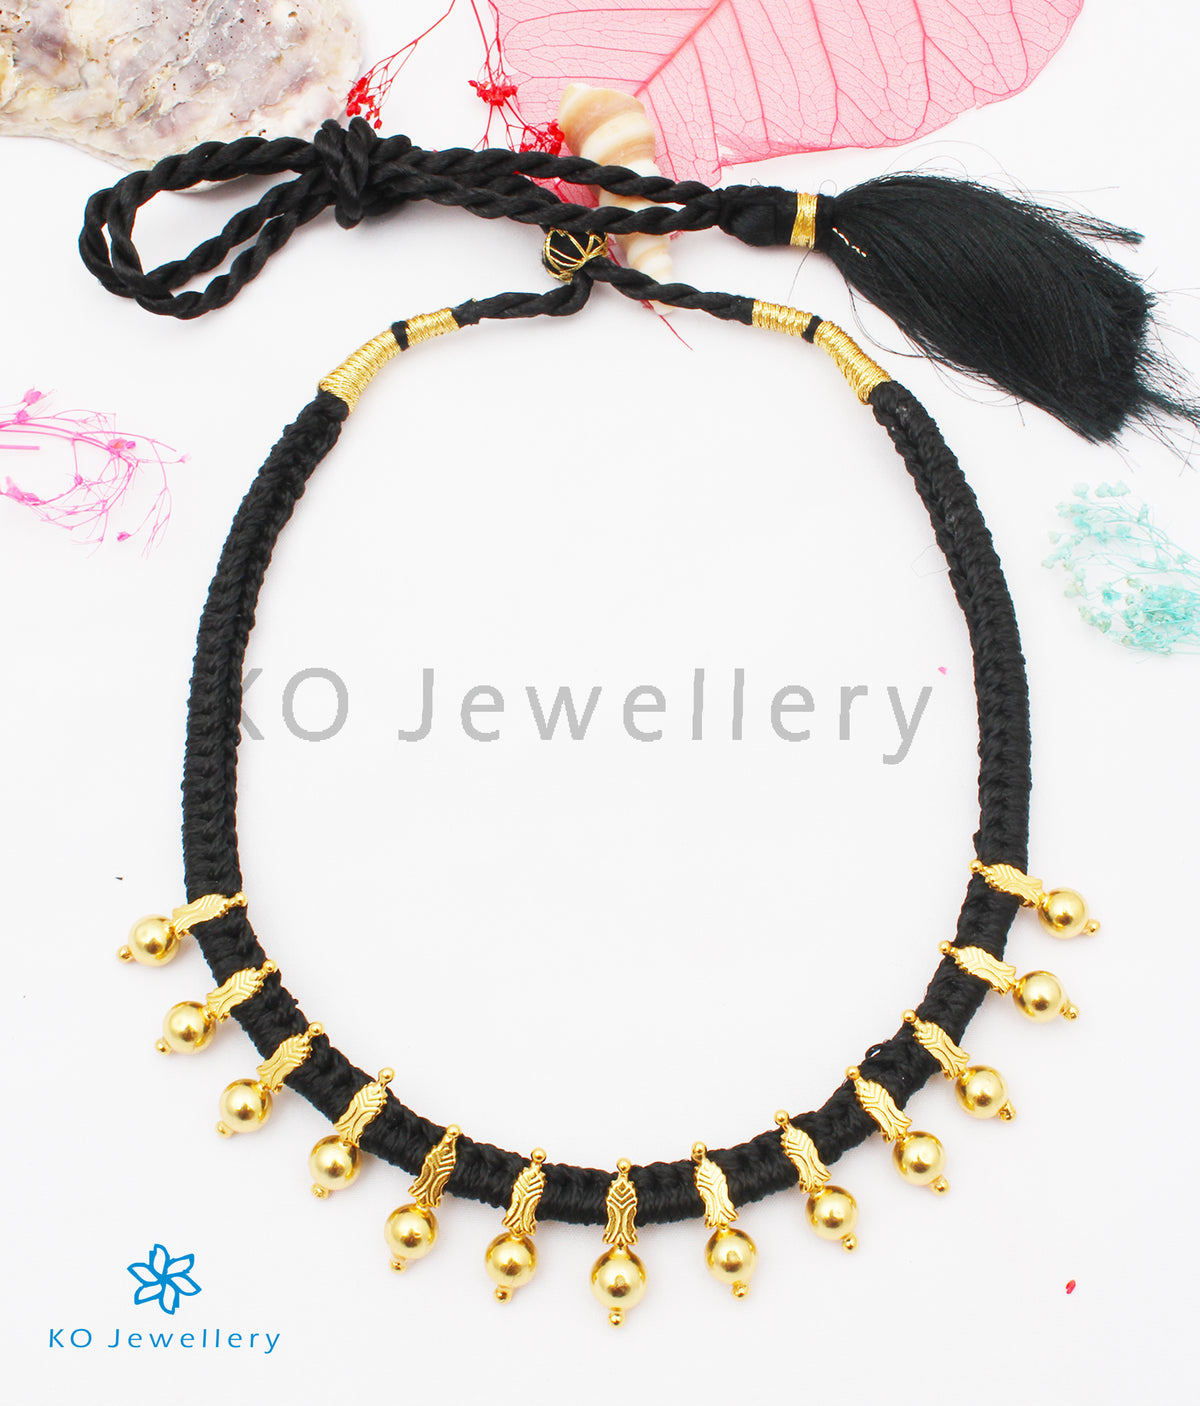 Handmade Beautiful Natural Shell, Kodi Flower Design Black Thread Necklace  | eBay